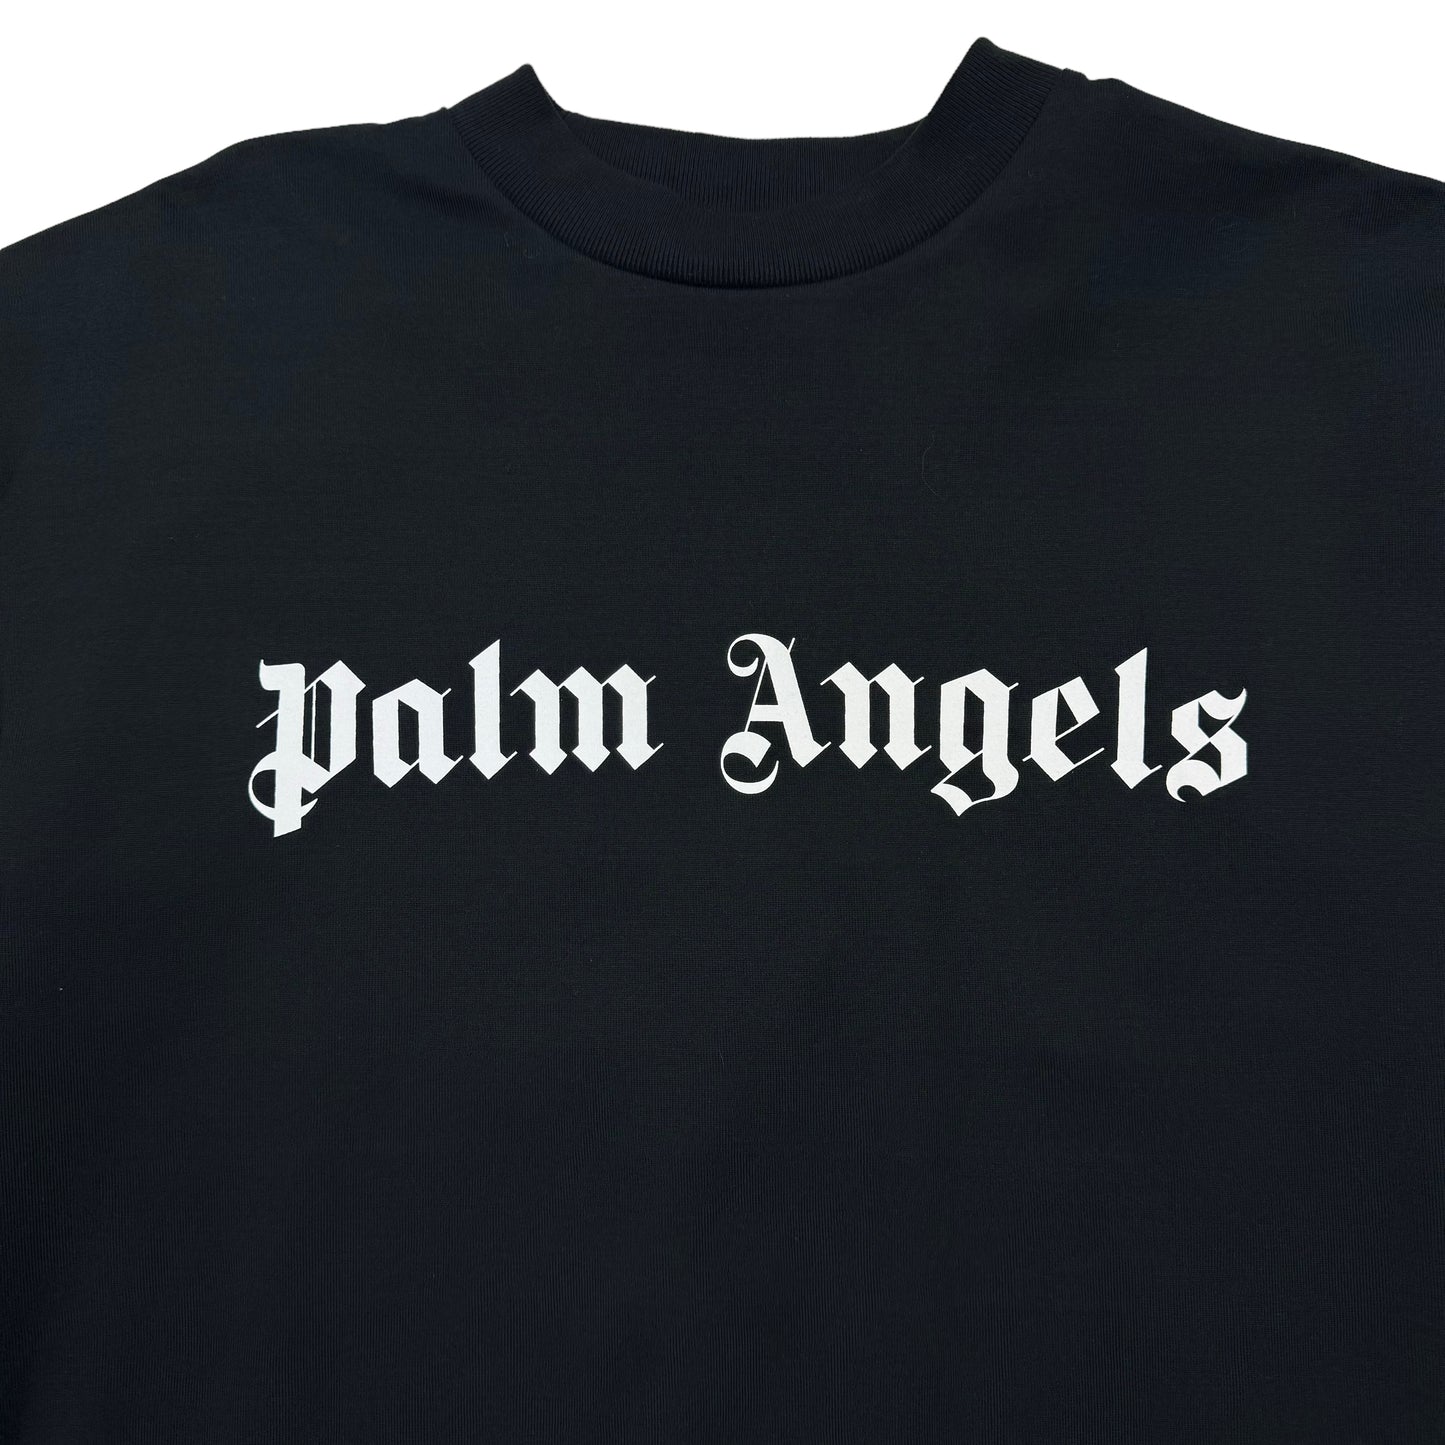 Palm Angels Logo Tee